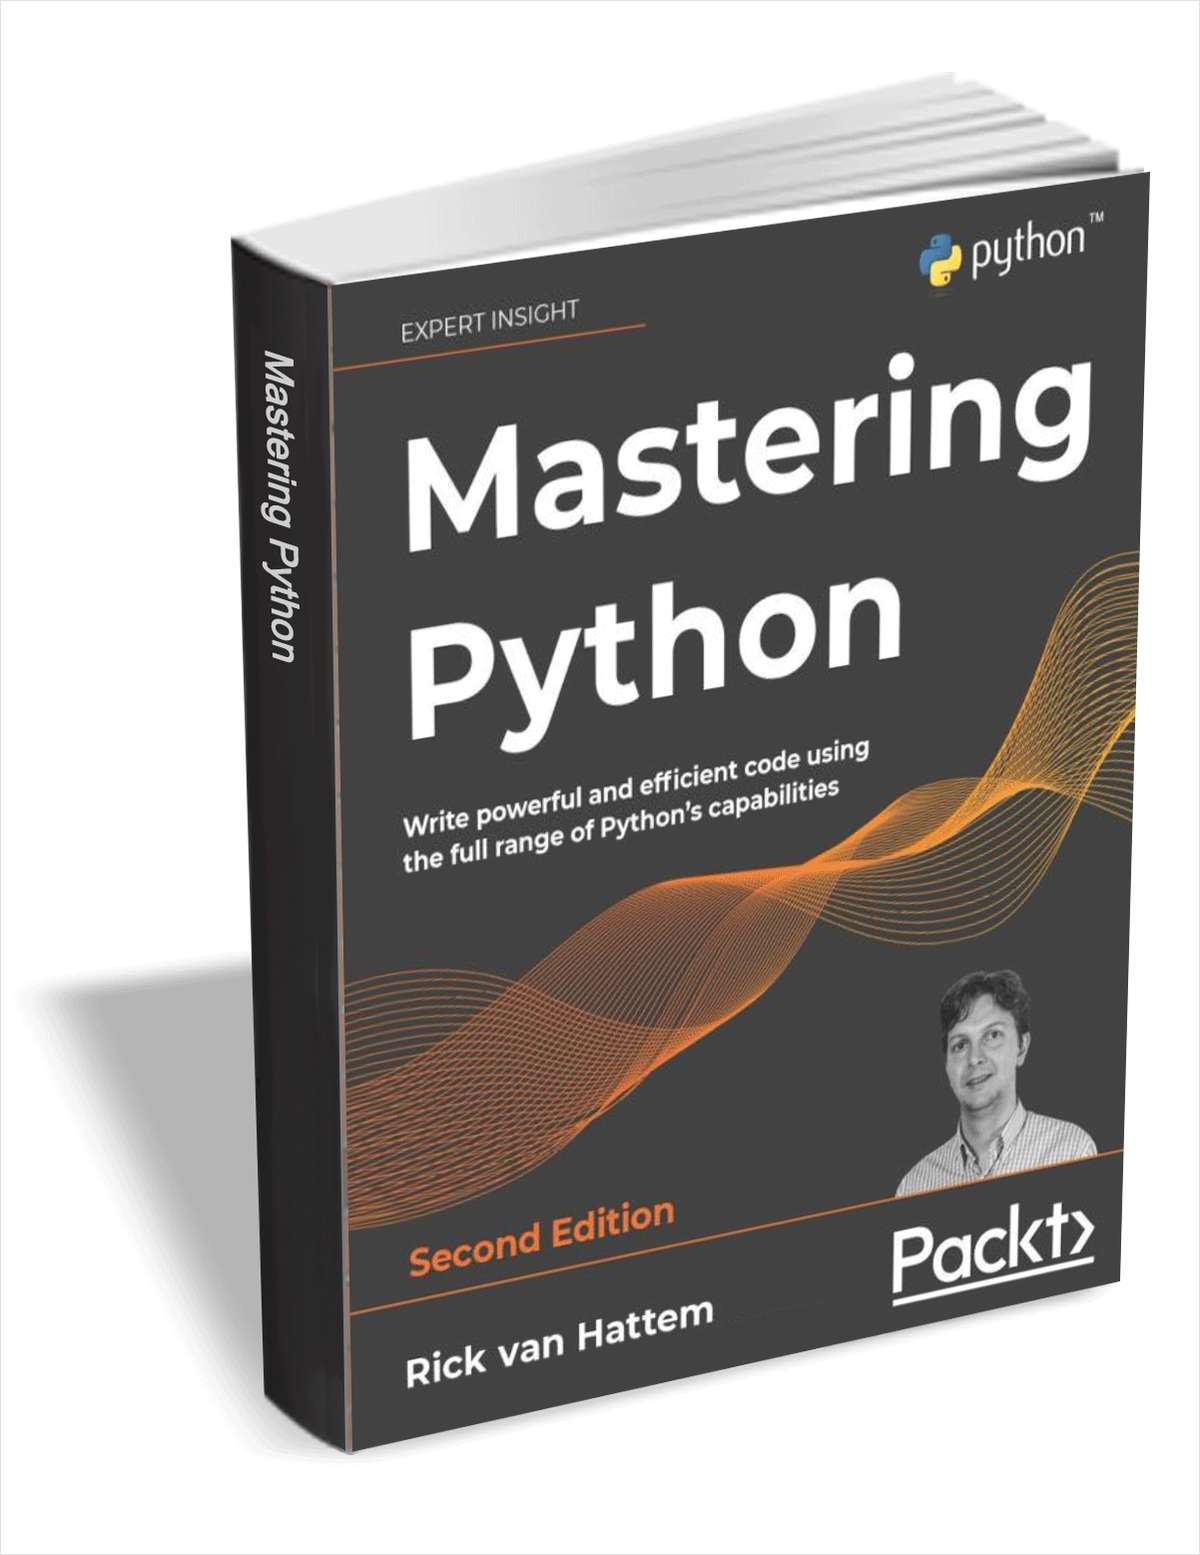 Pymorphy2 Python. Second python